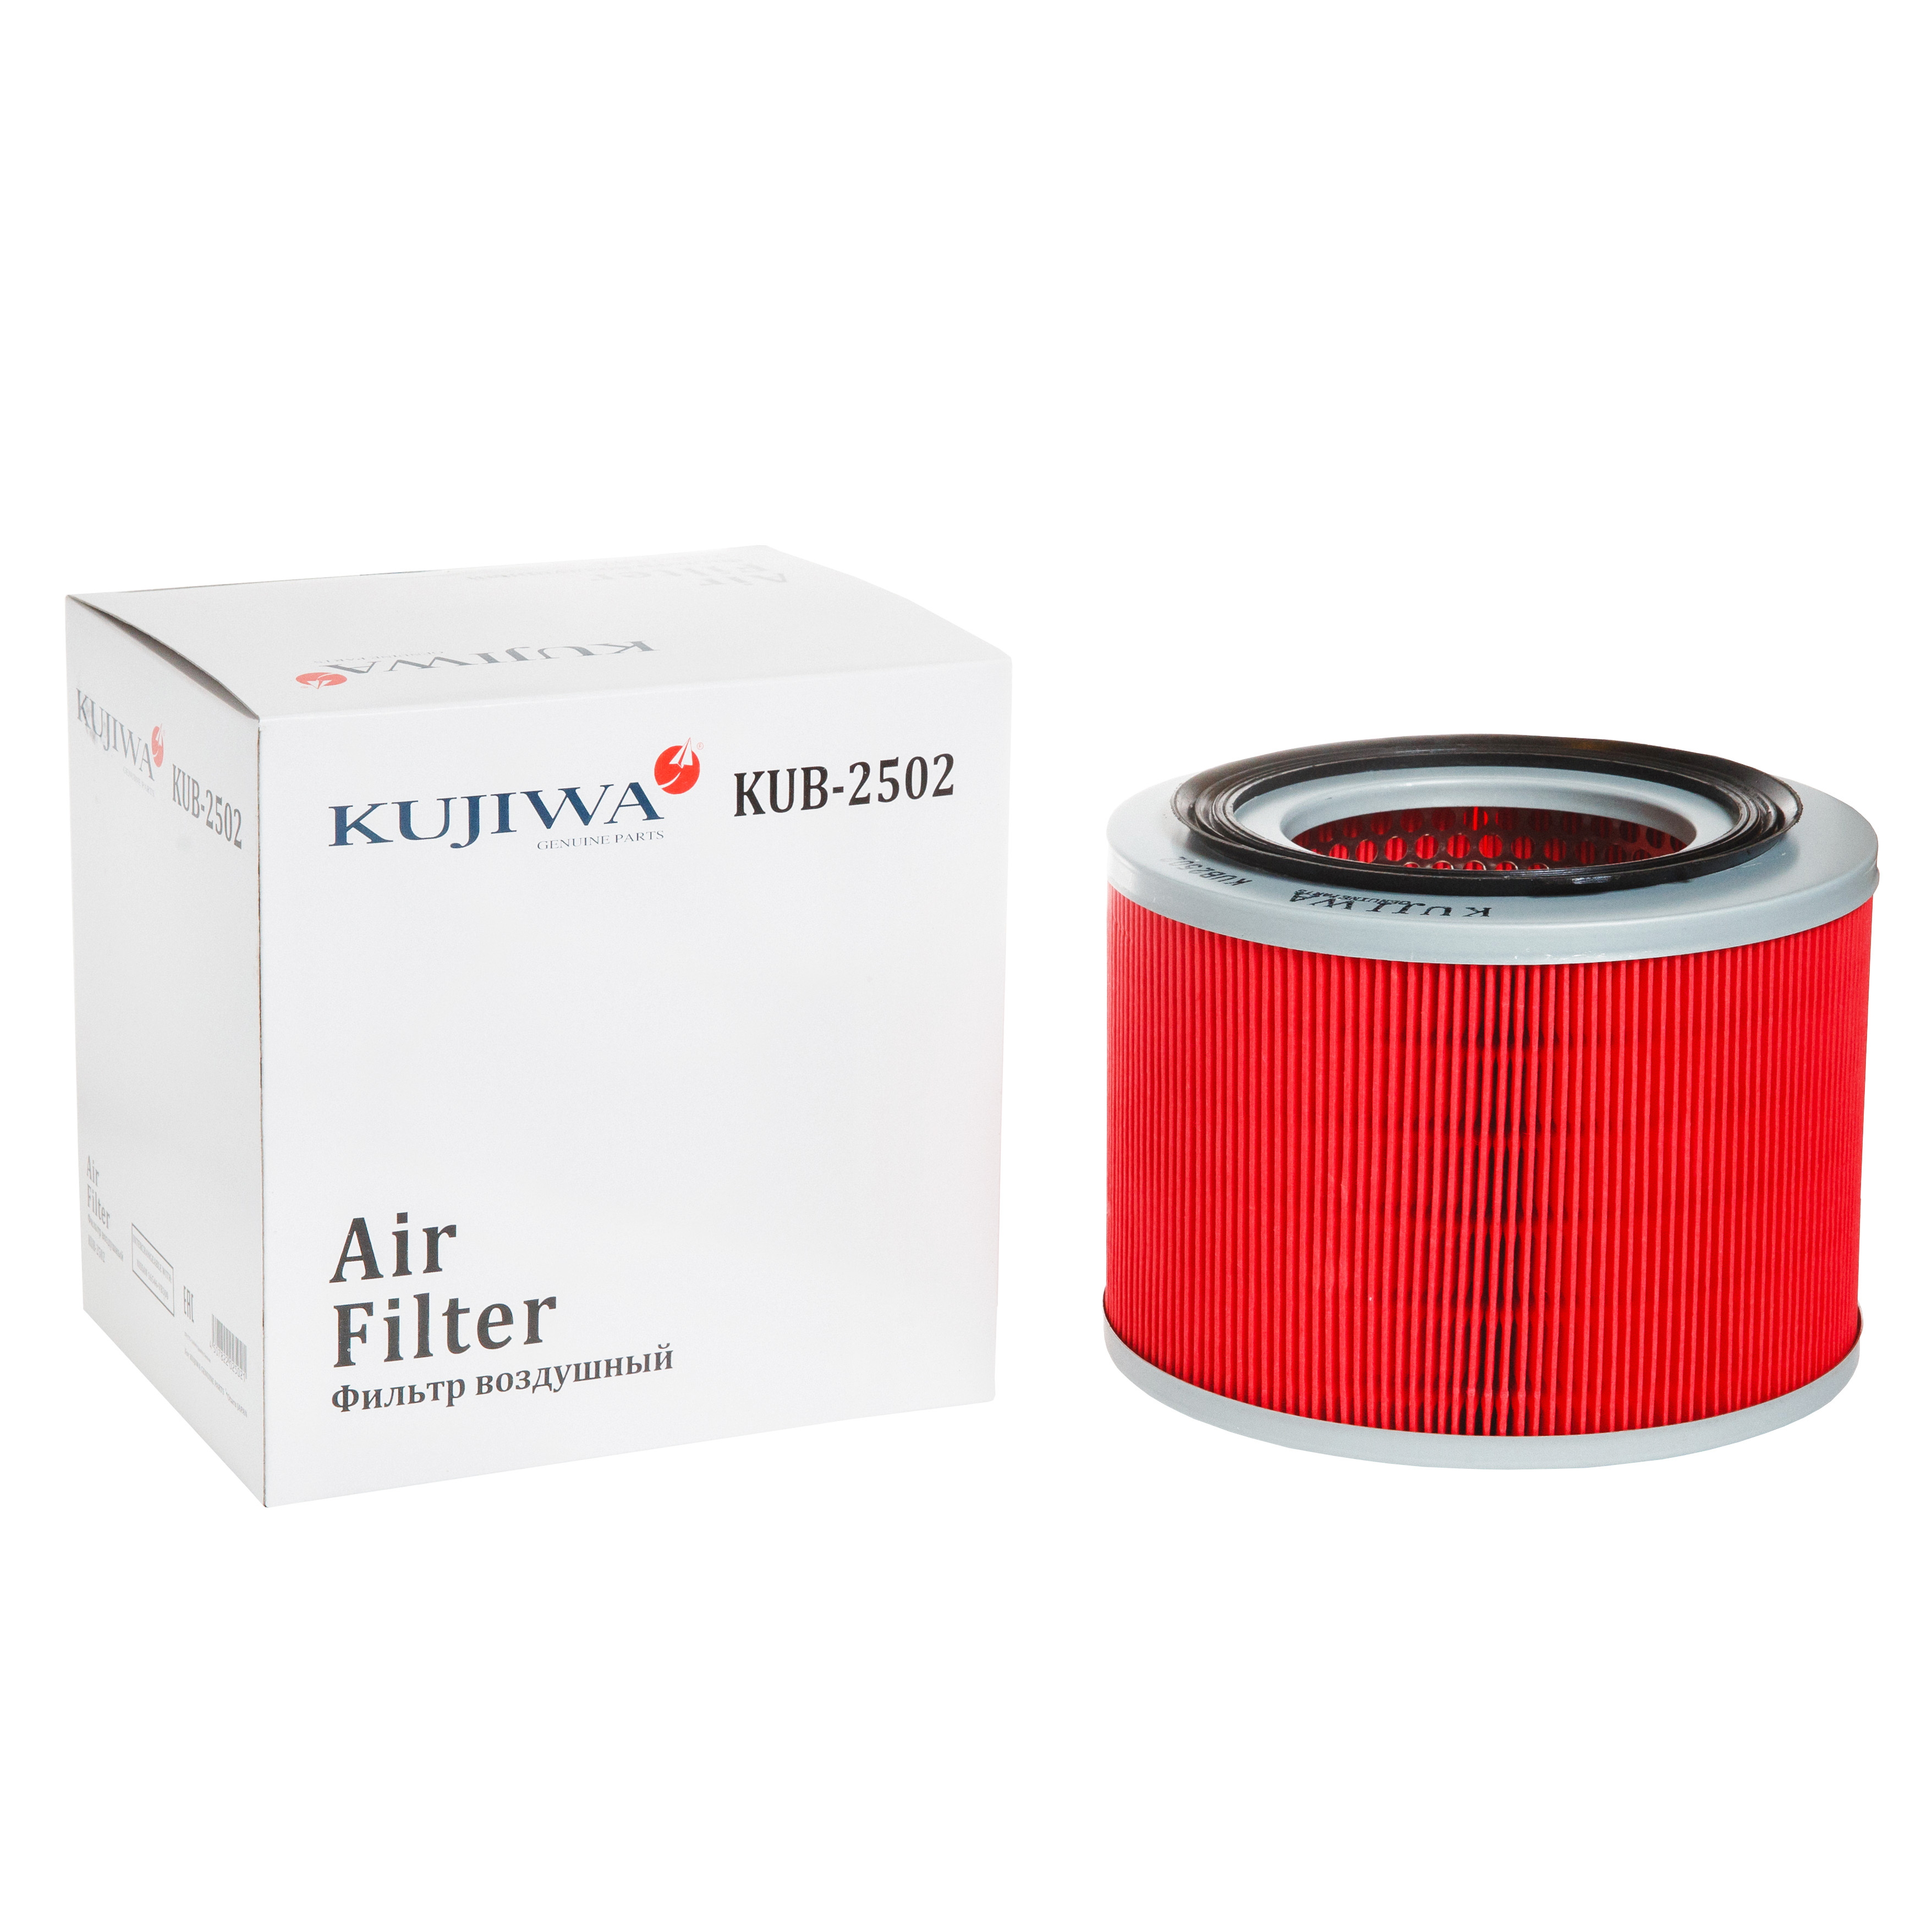 Фильтр воздушный kub2502 kujiwa 16546vc10a nissan - Kujiwa KUB2502